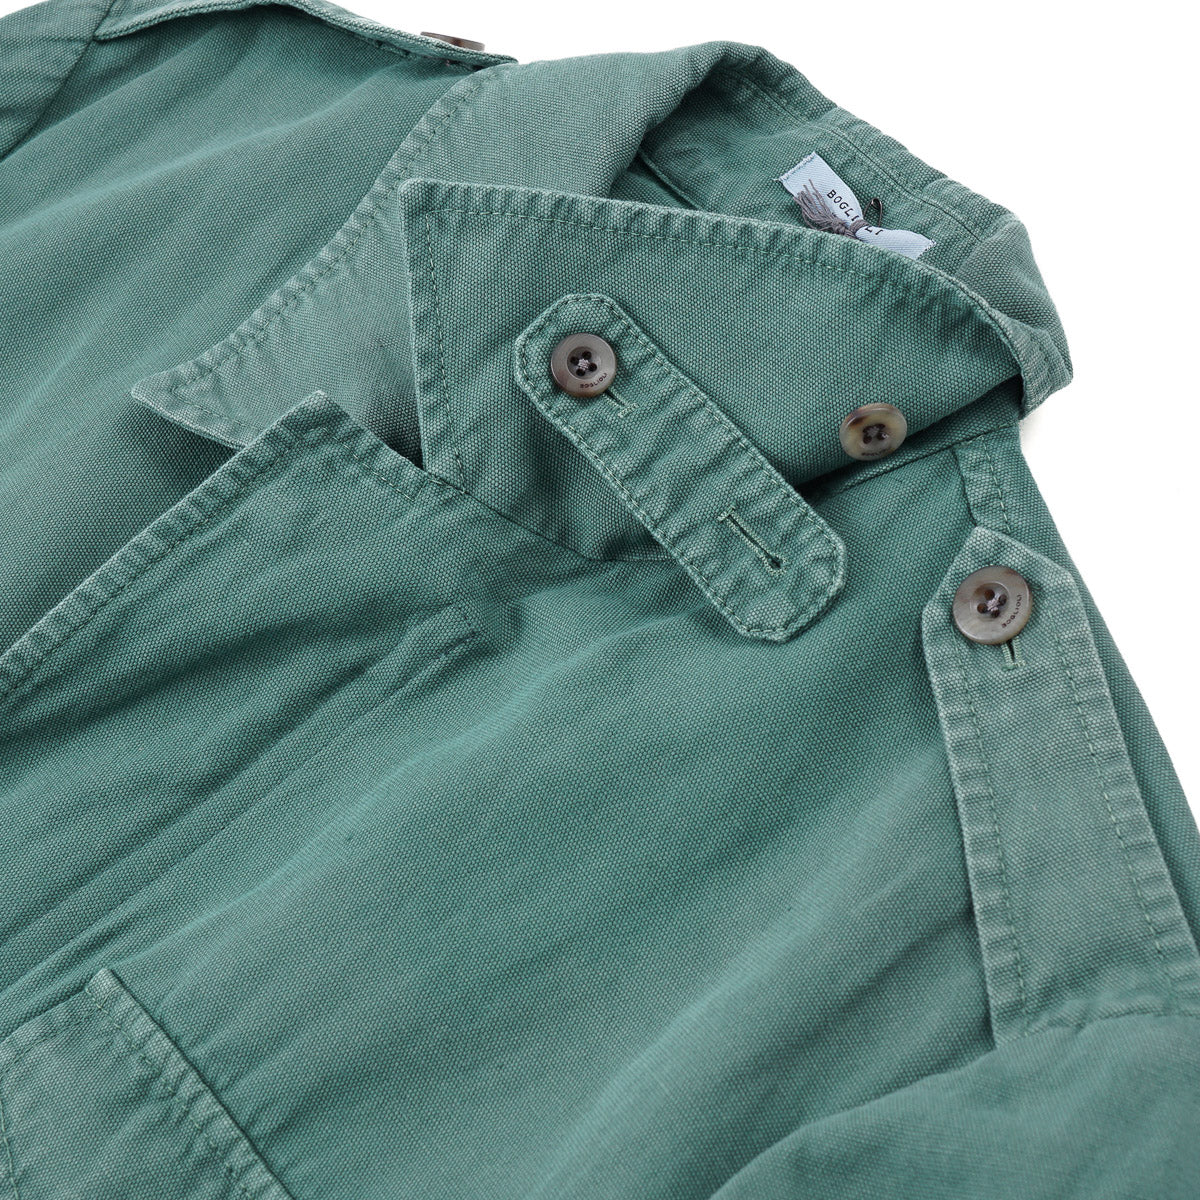 Boglioli Cotton and Linen Field Jacket - Top Shelf Apparel